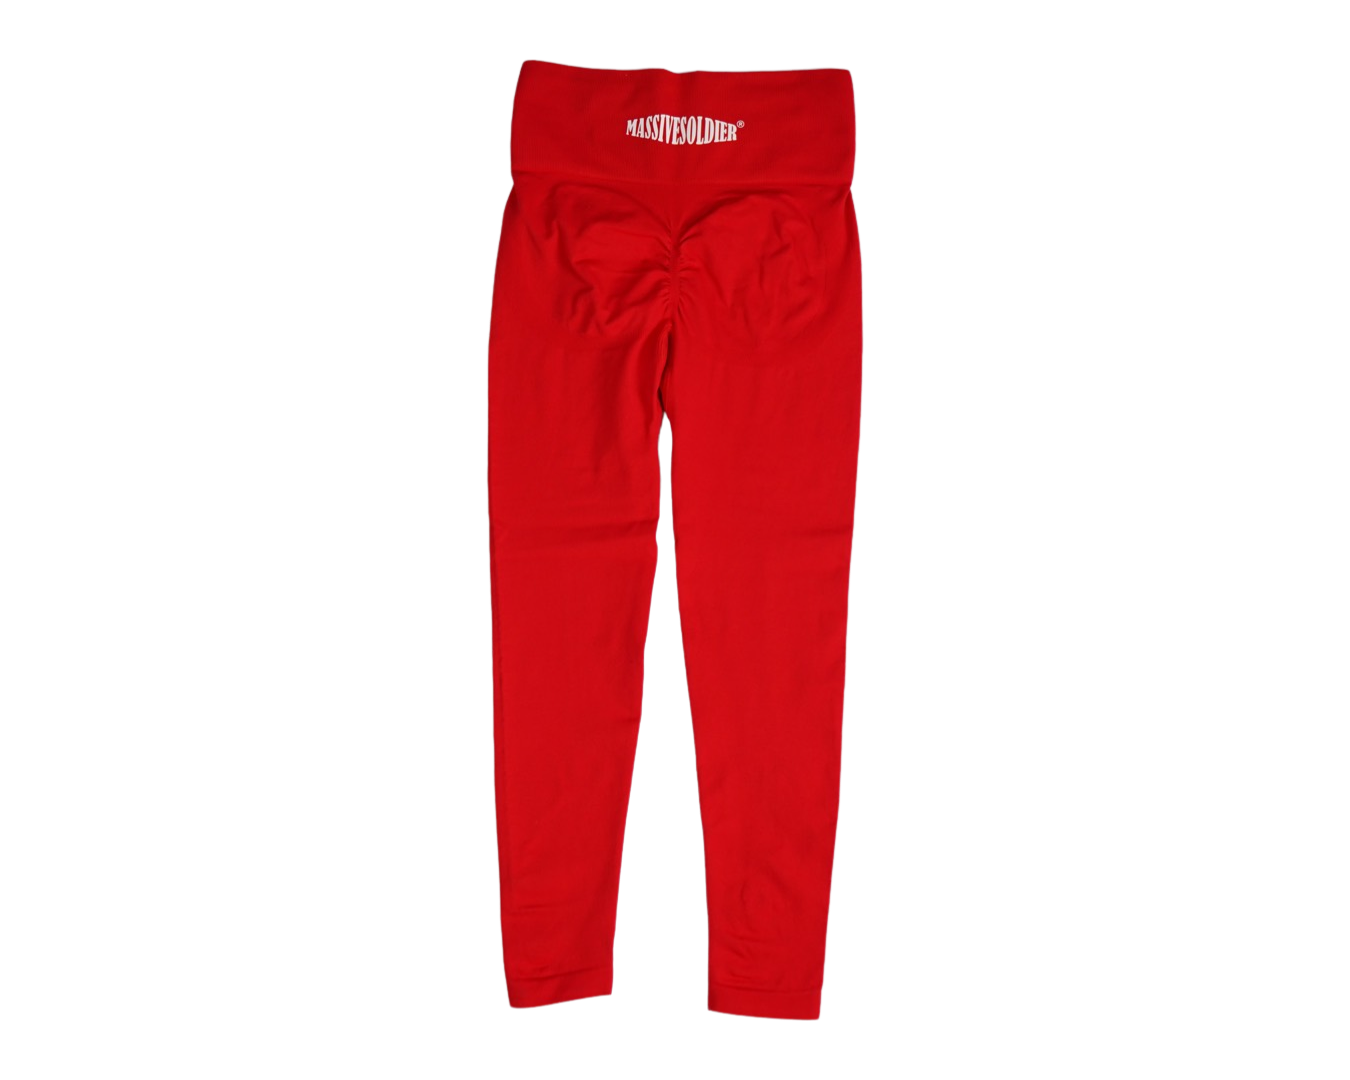 Massive Red scrunch leggings